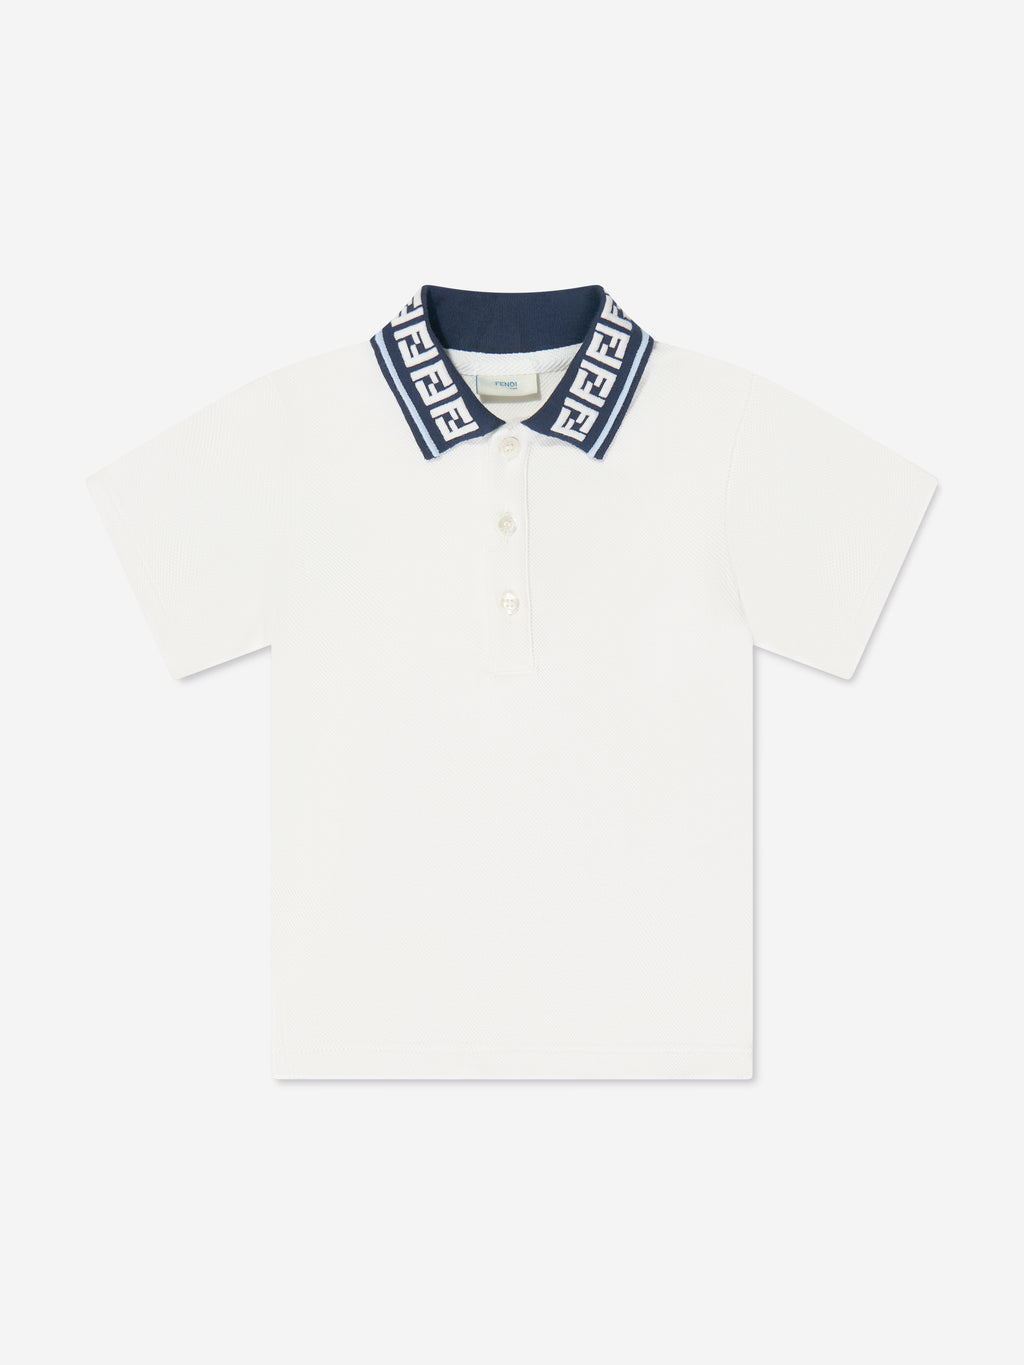 Junior Polo Shirt - White jersey junior polo shirt with FF logo